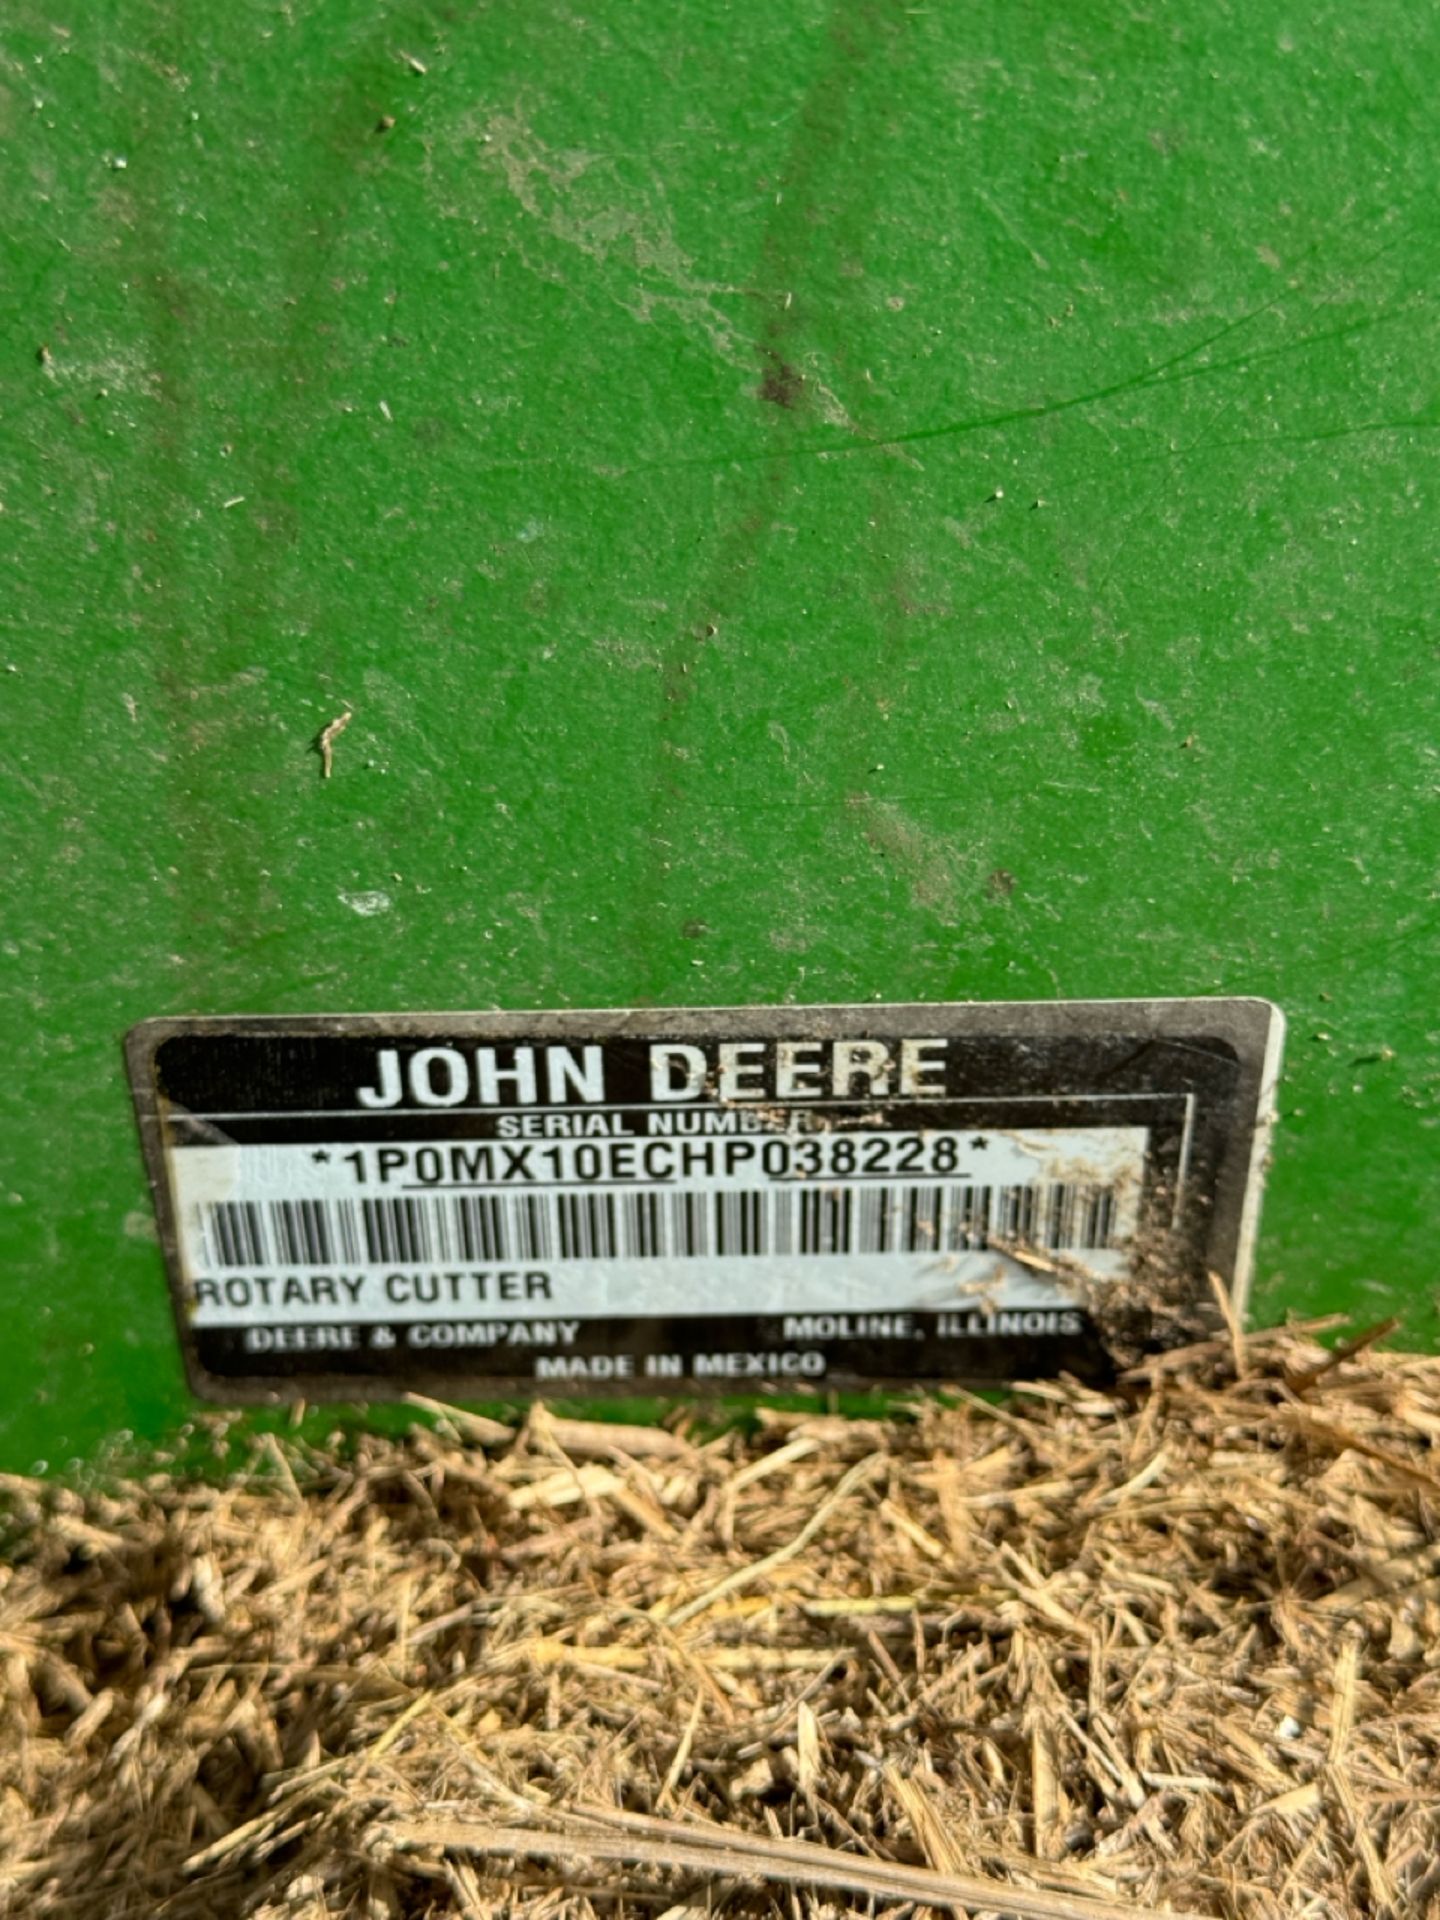 John Deere Mower Attachment, MX10 - Image 6 of 6